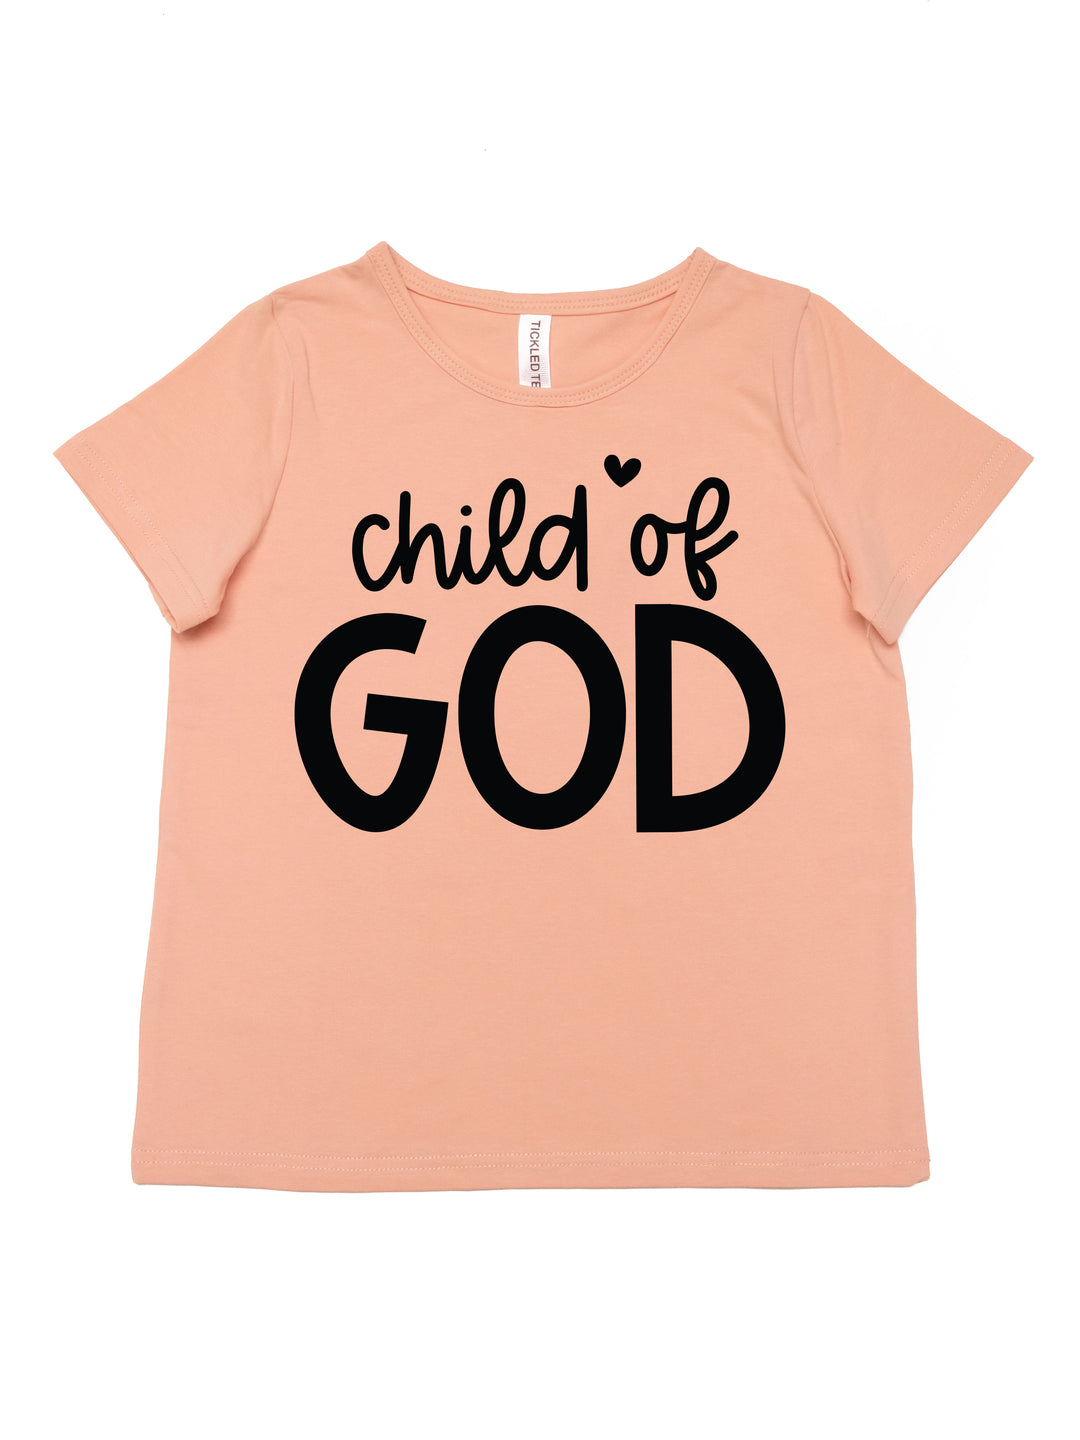 Child of God Kids Graphic Tee